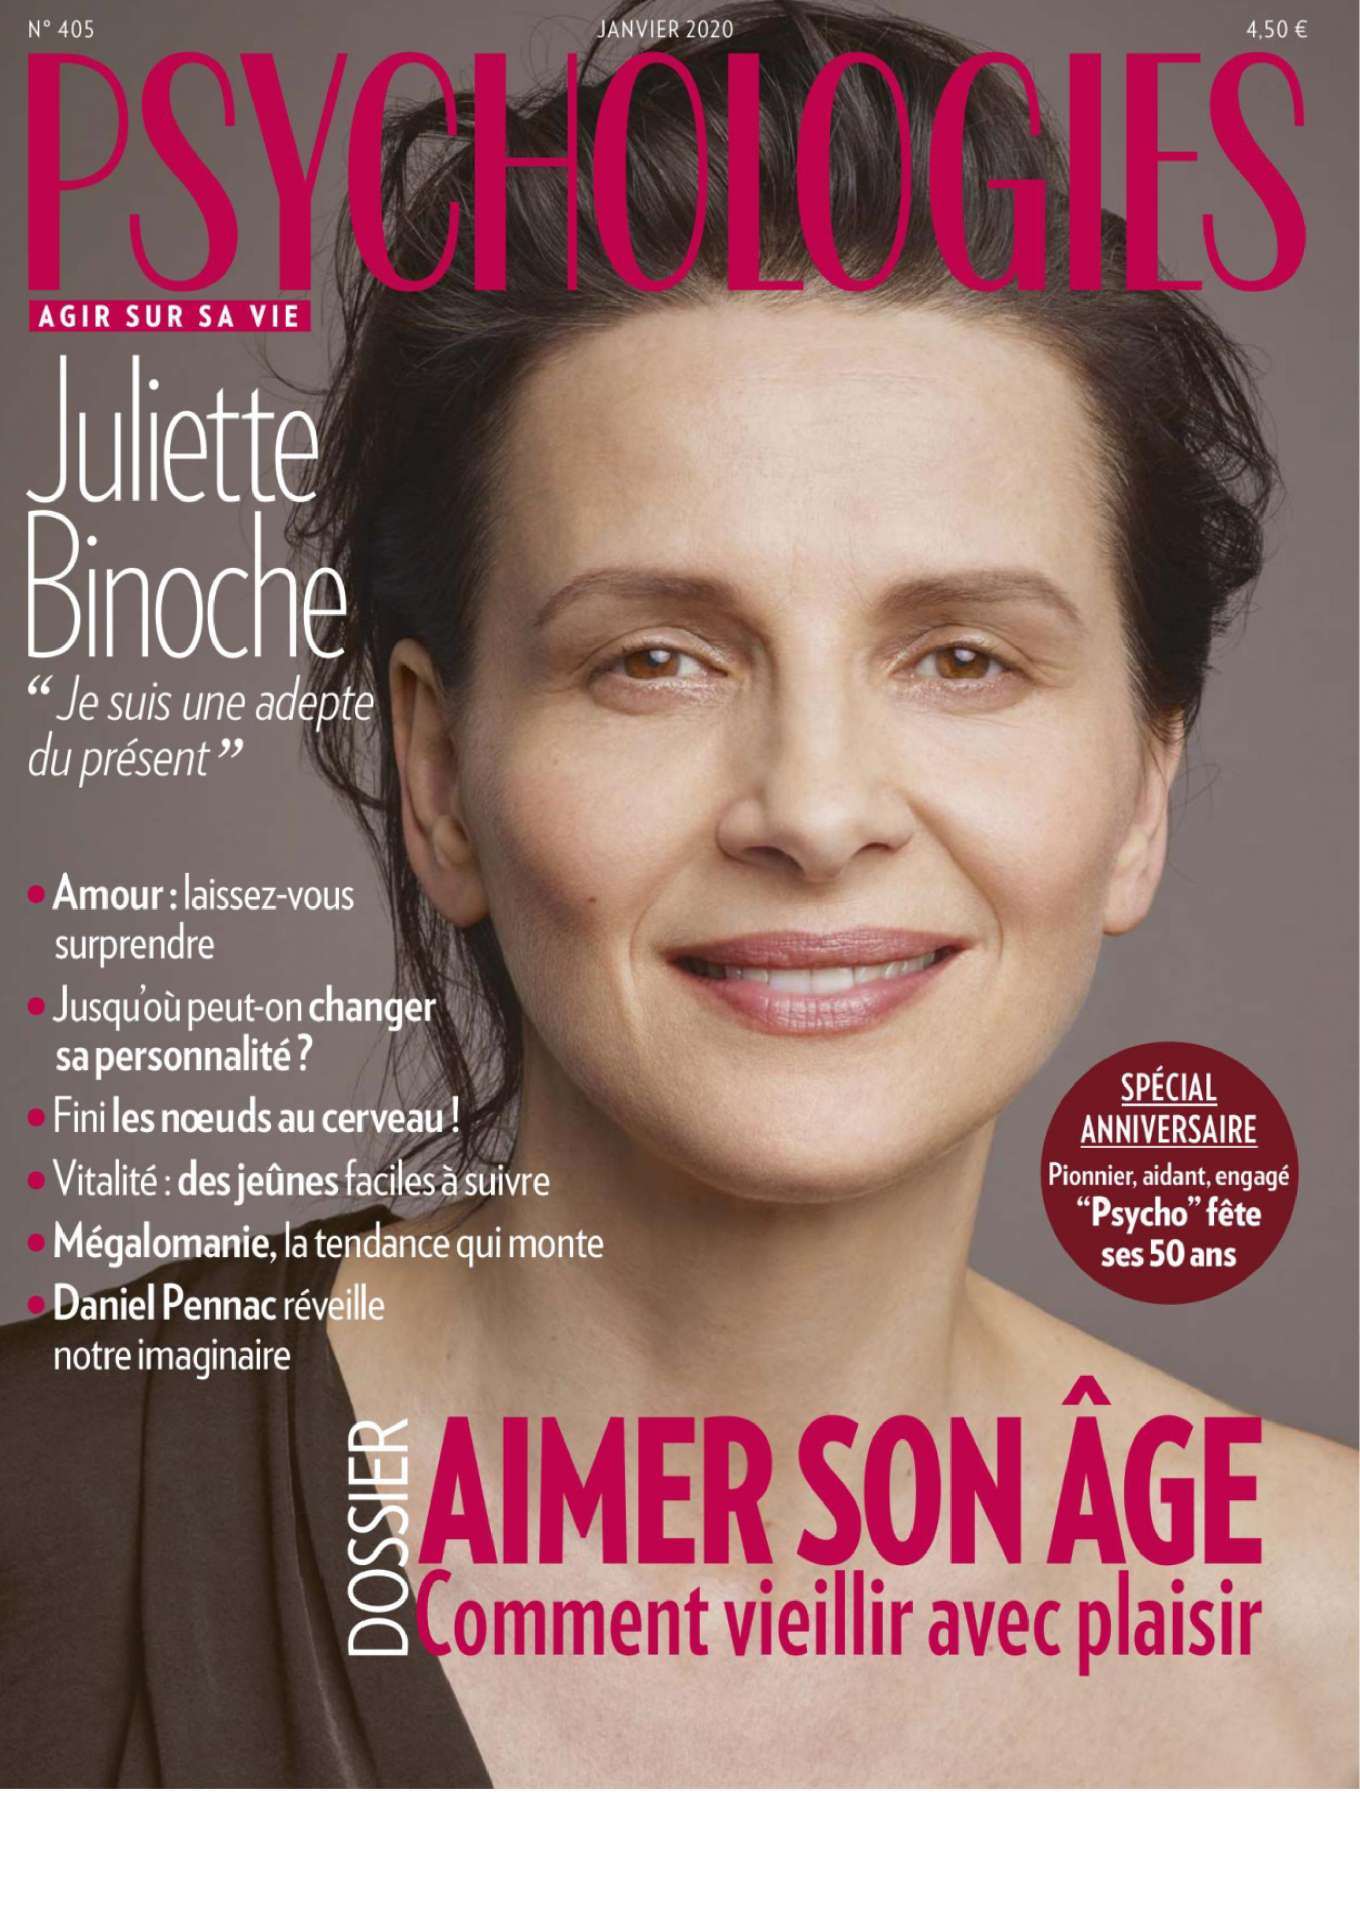 Juliette Binoche - Psychologies France Magazine (January 2020)